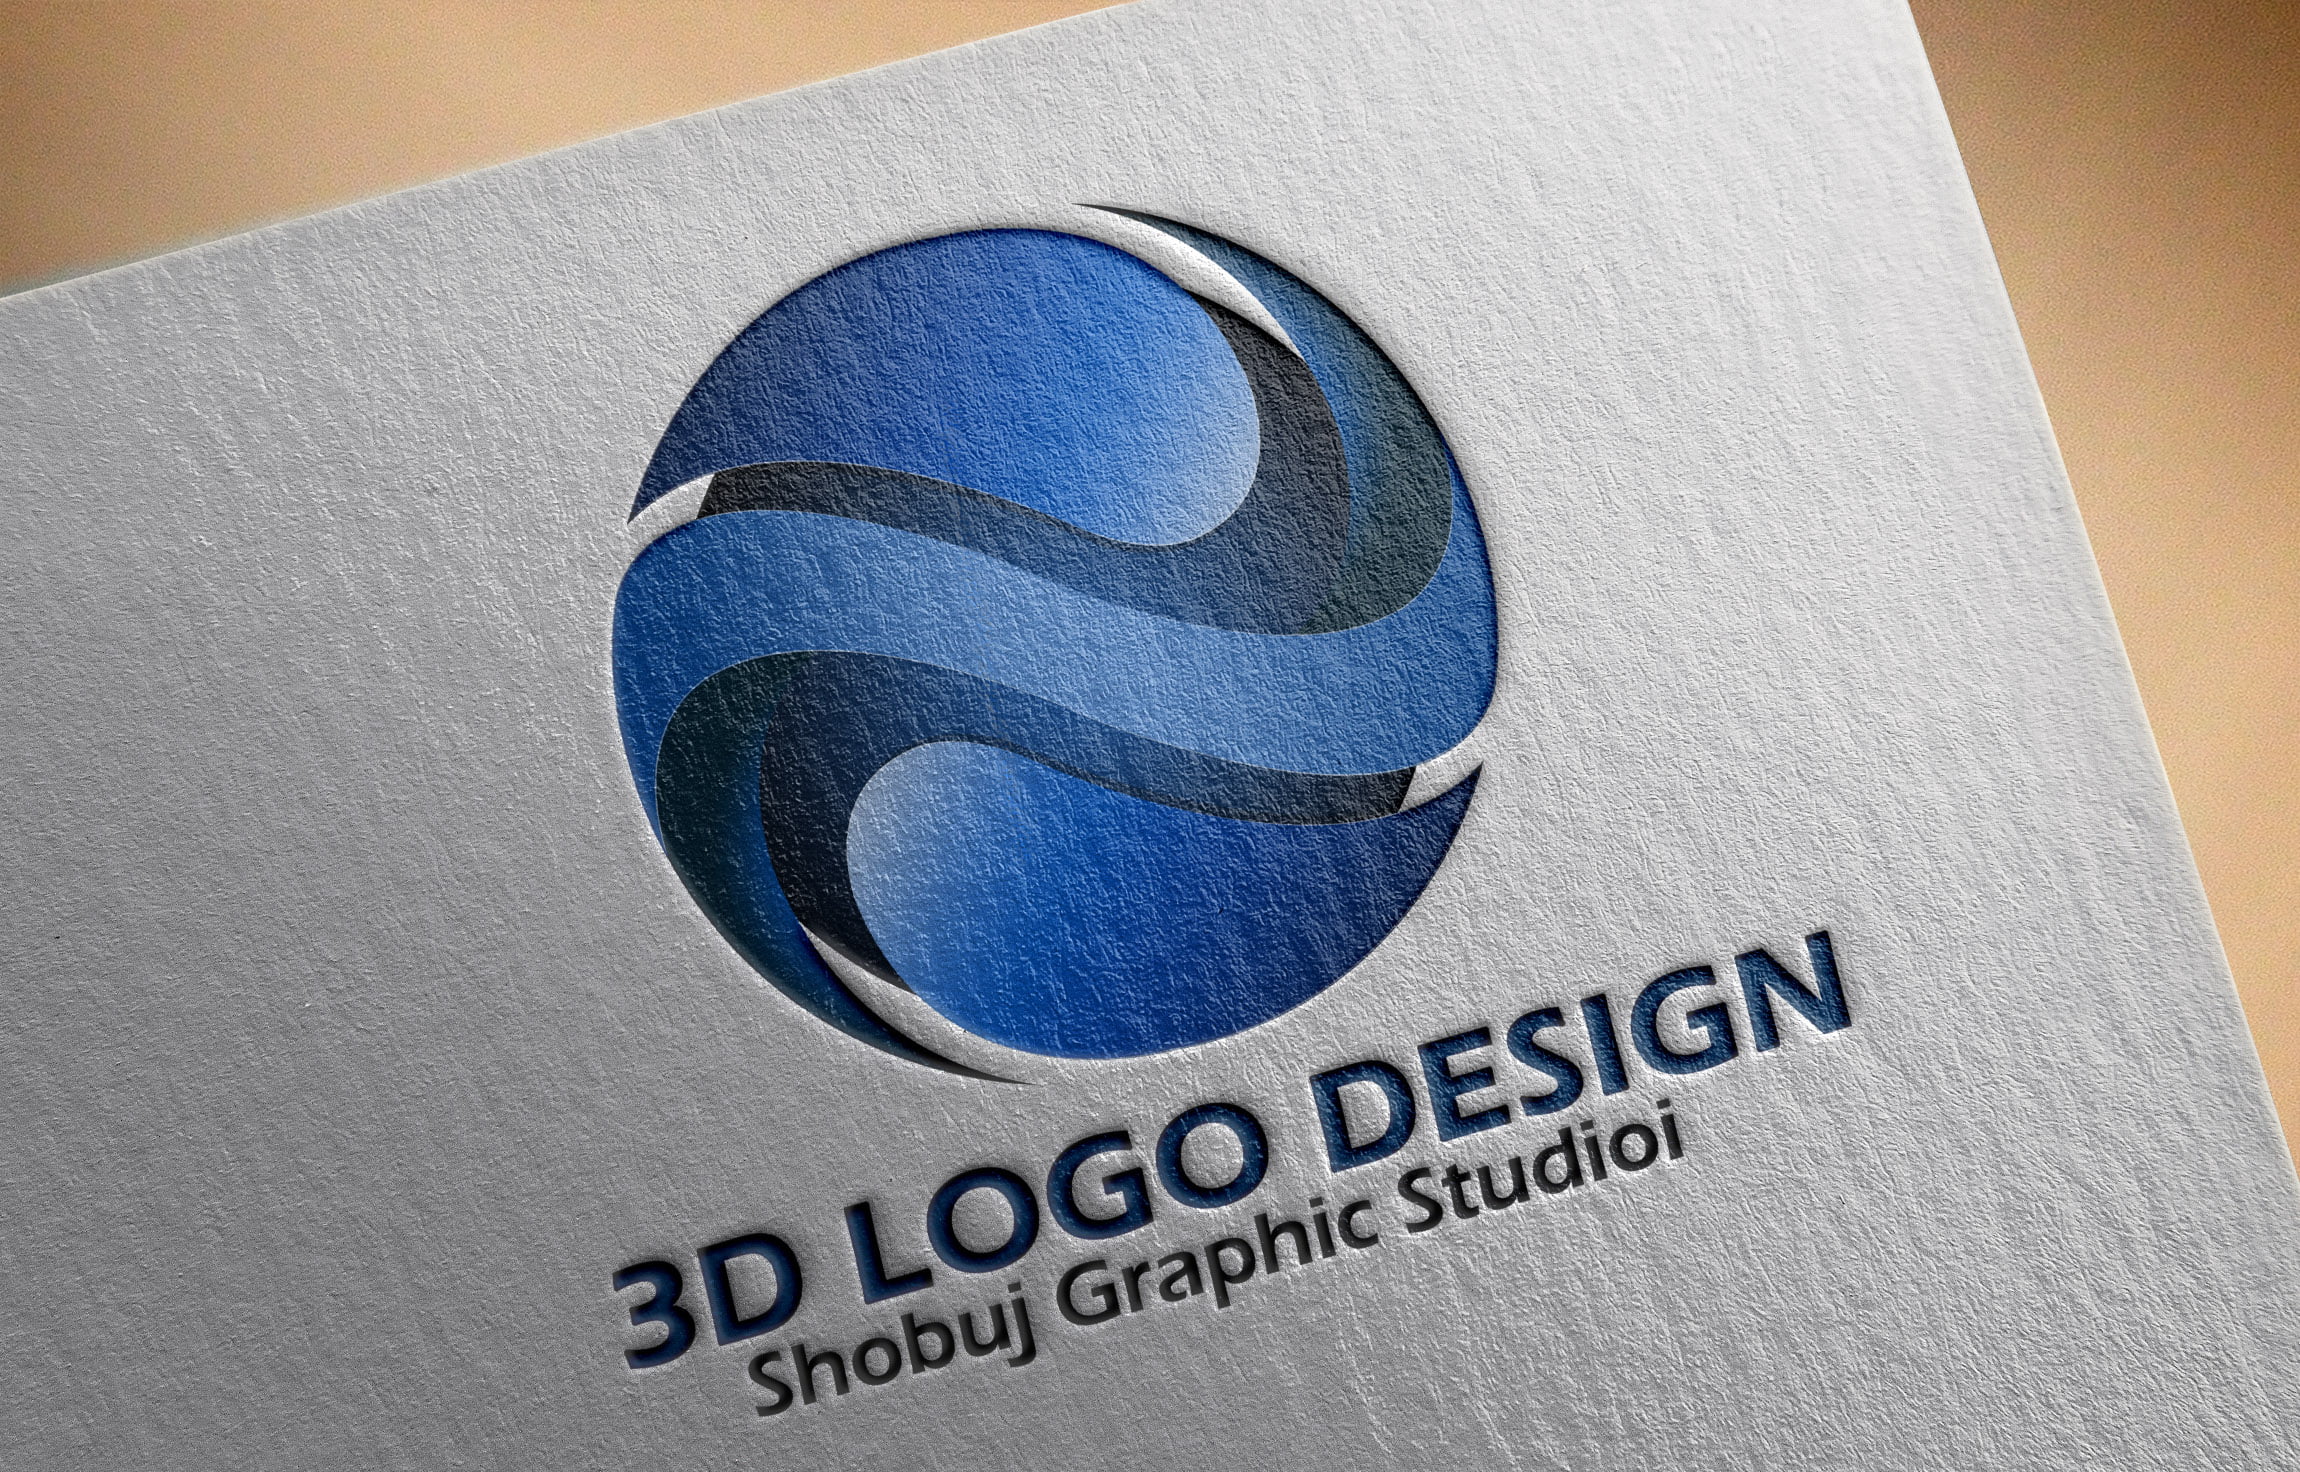 design logo online for free